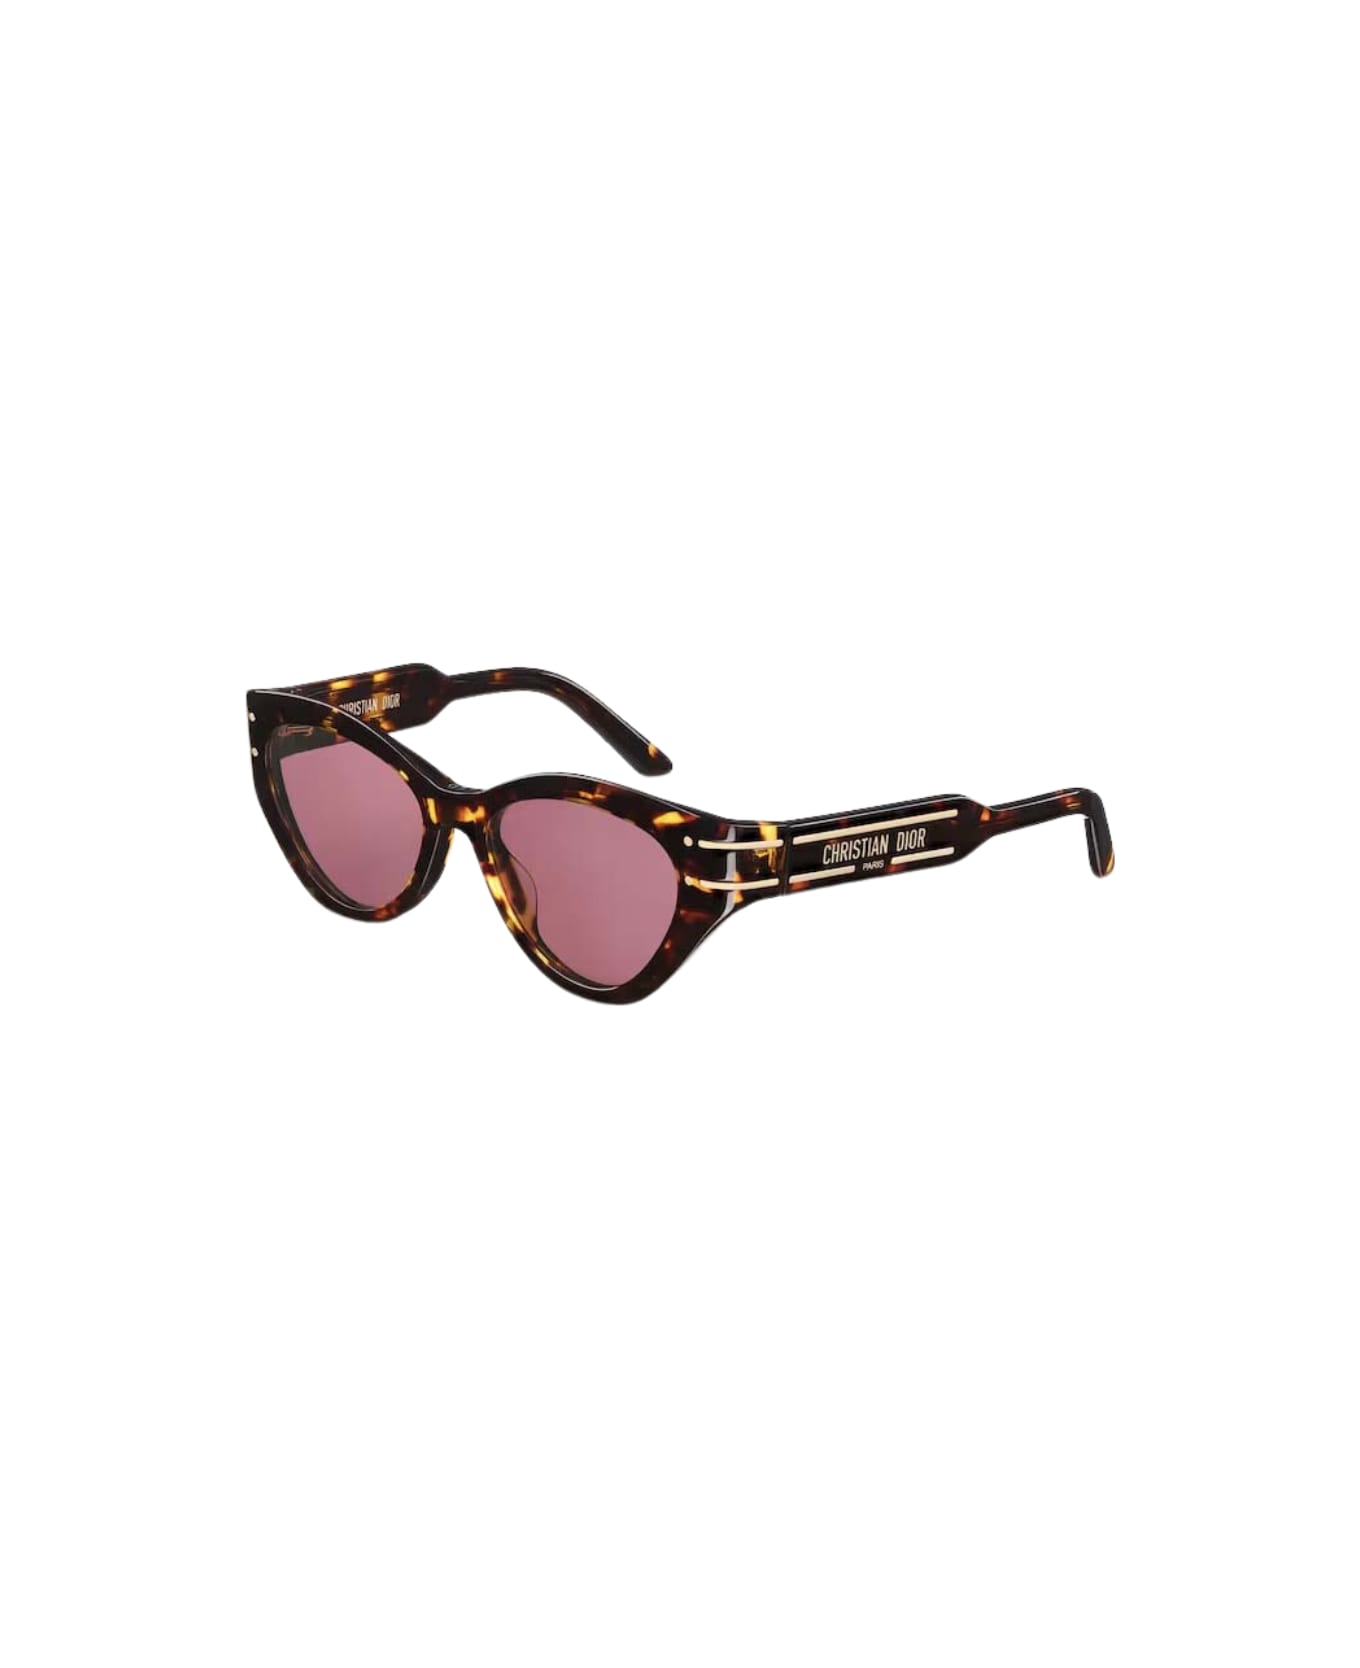 Dior Eyewear Sunglasses - Havana/Rosa